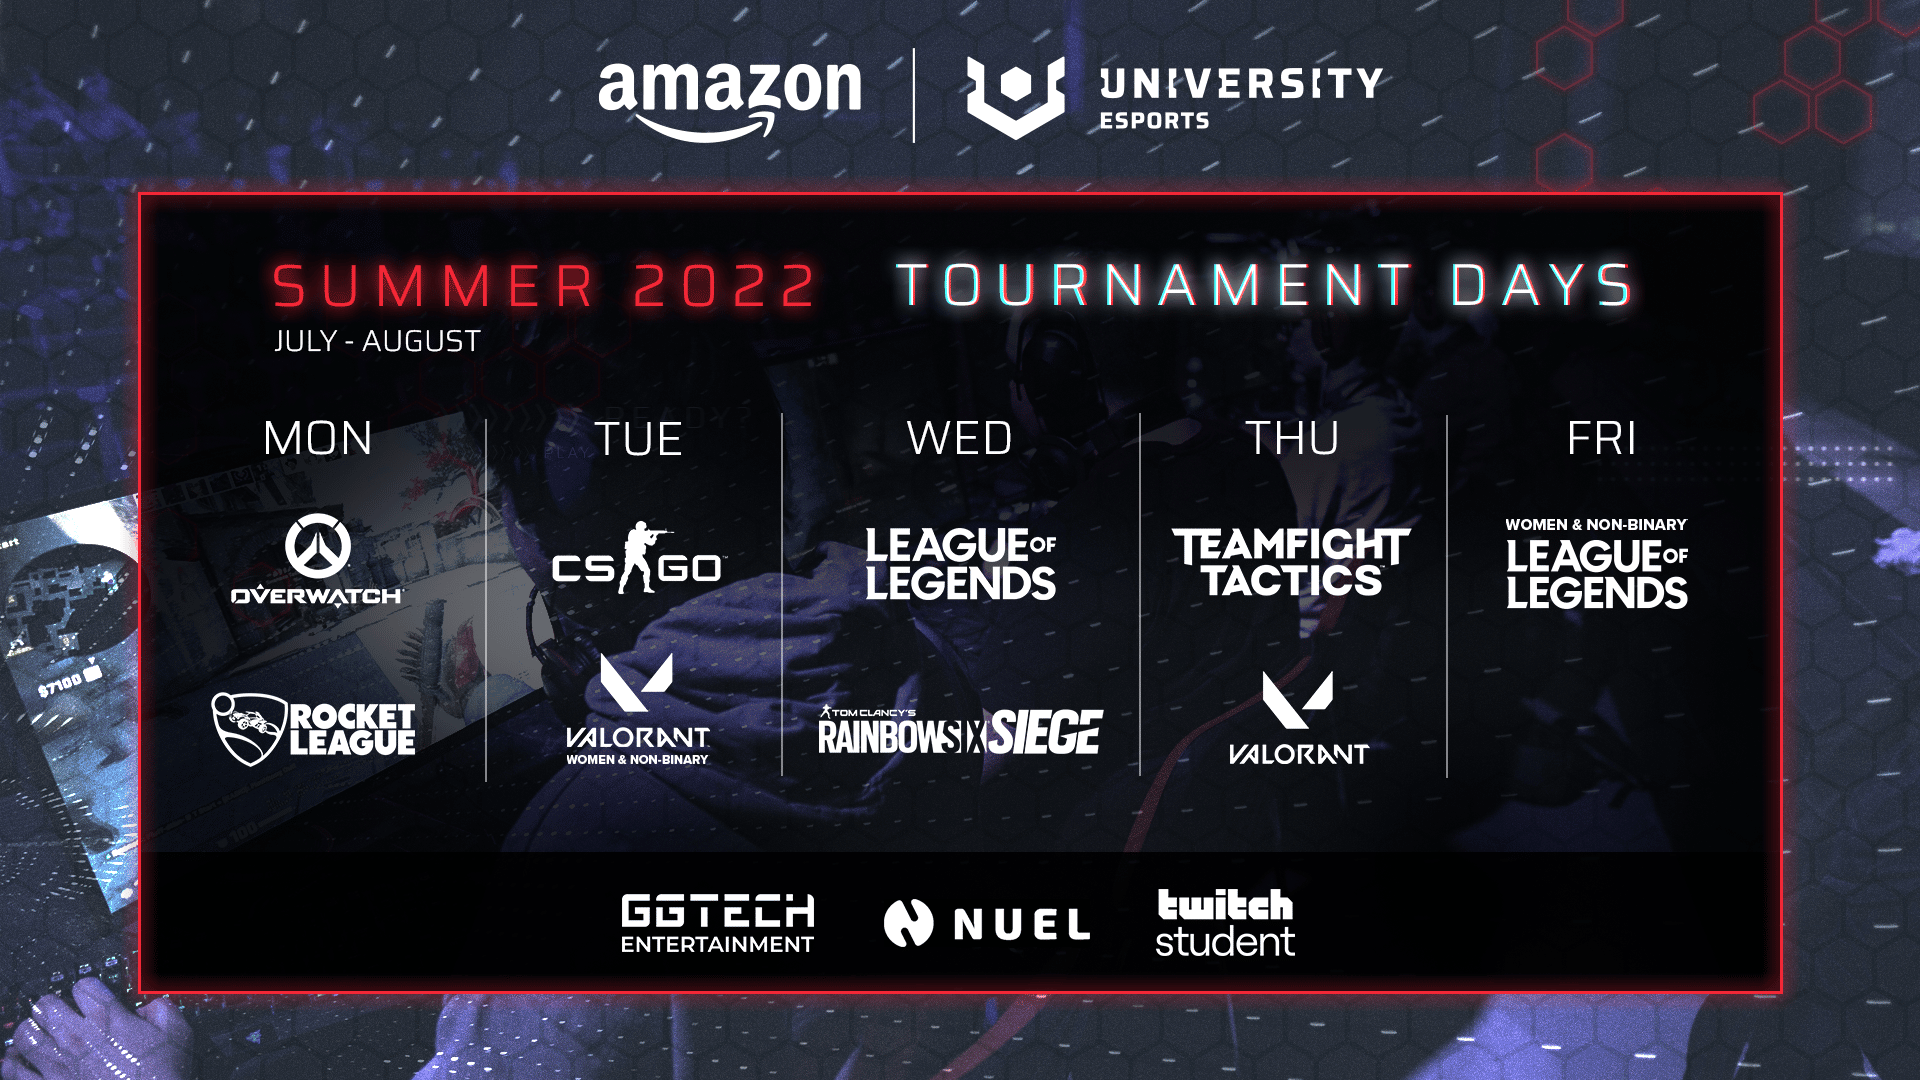 Amazon University Esports Summer 2022 UK tournament begins